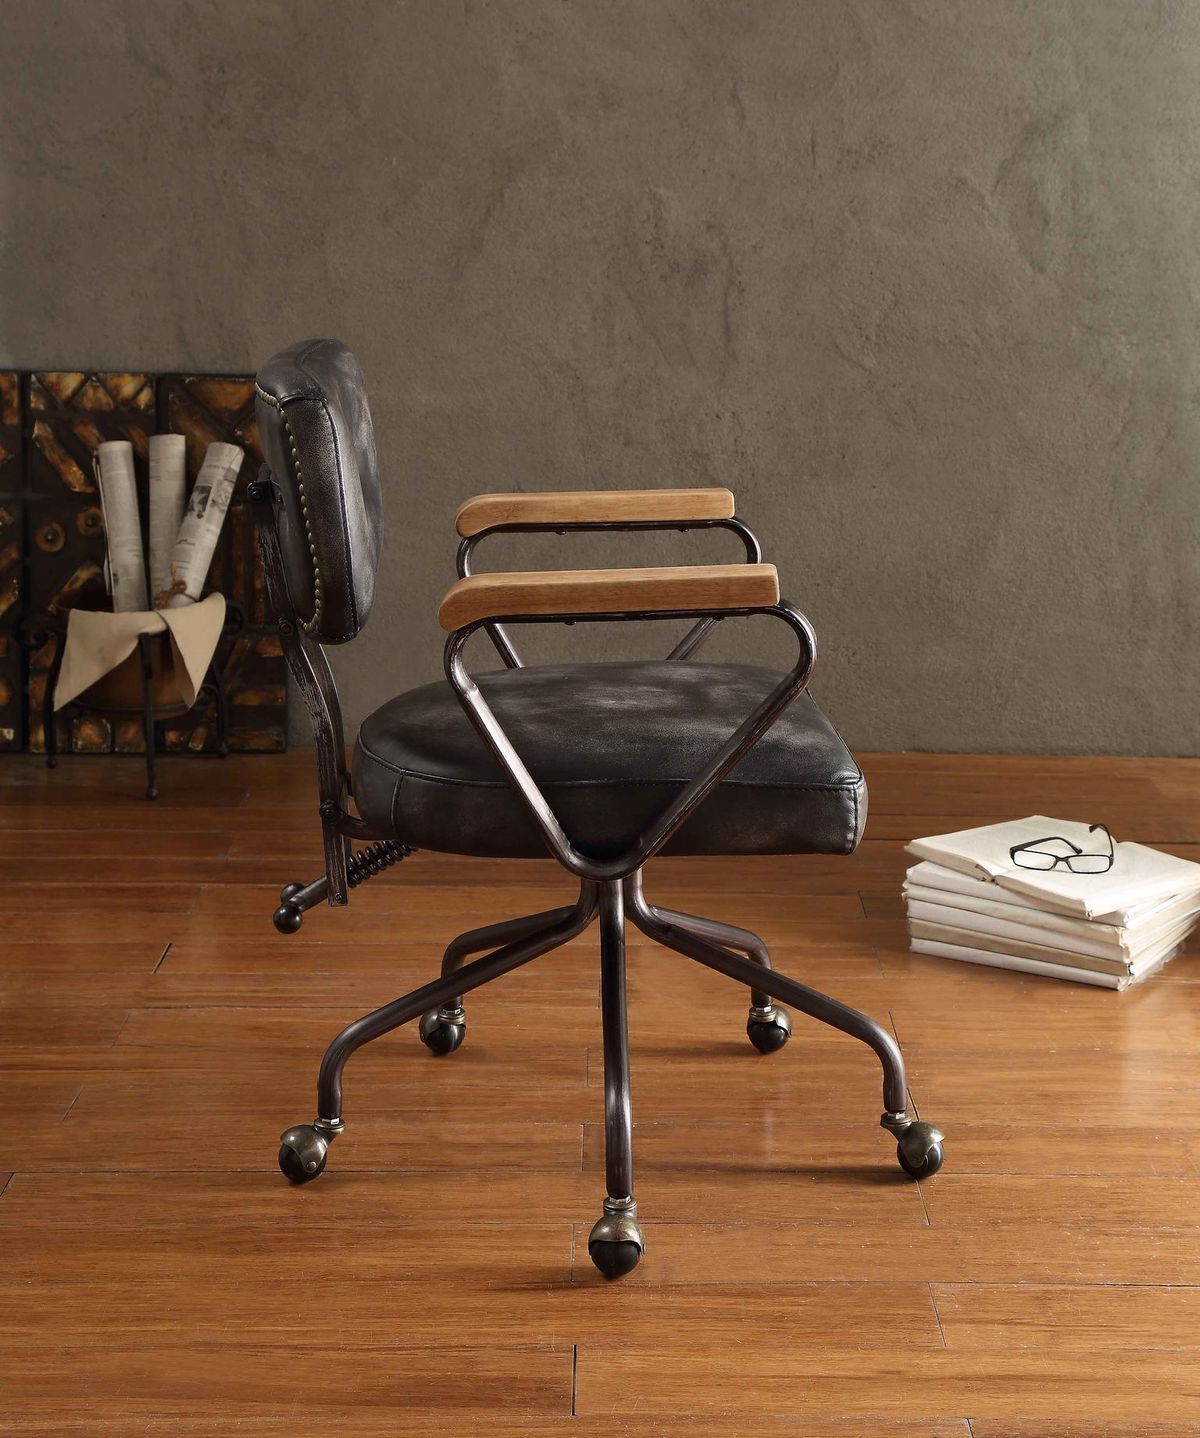 ACME Hallie Office Chair in Vintage Black Top Grain Leather